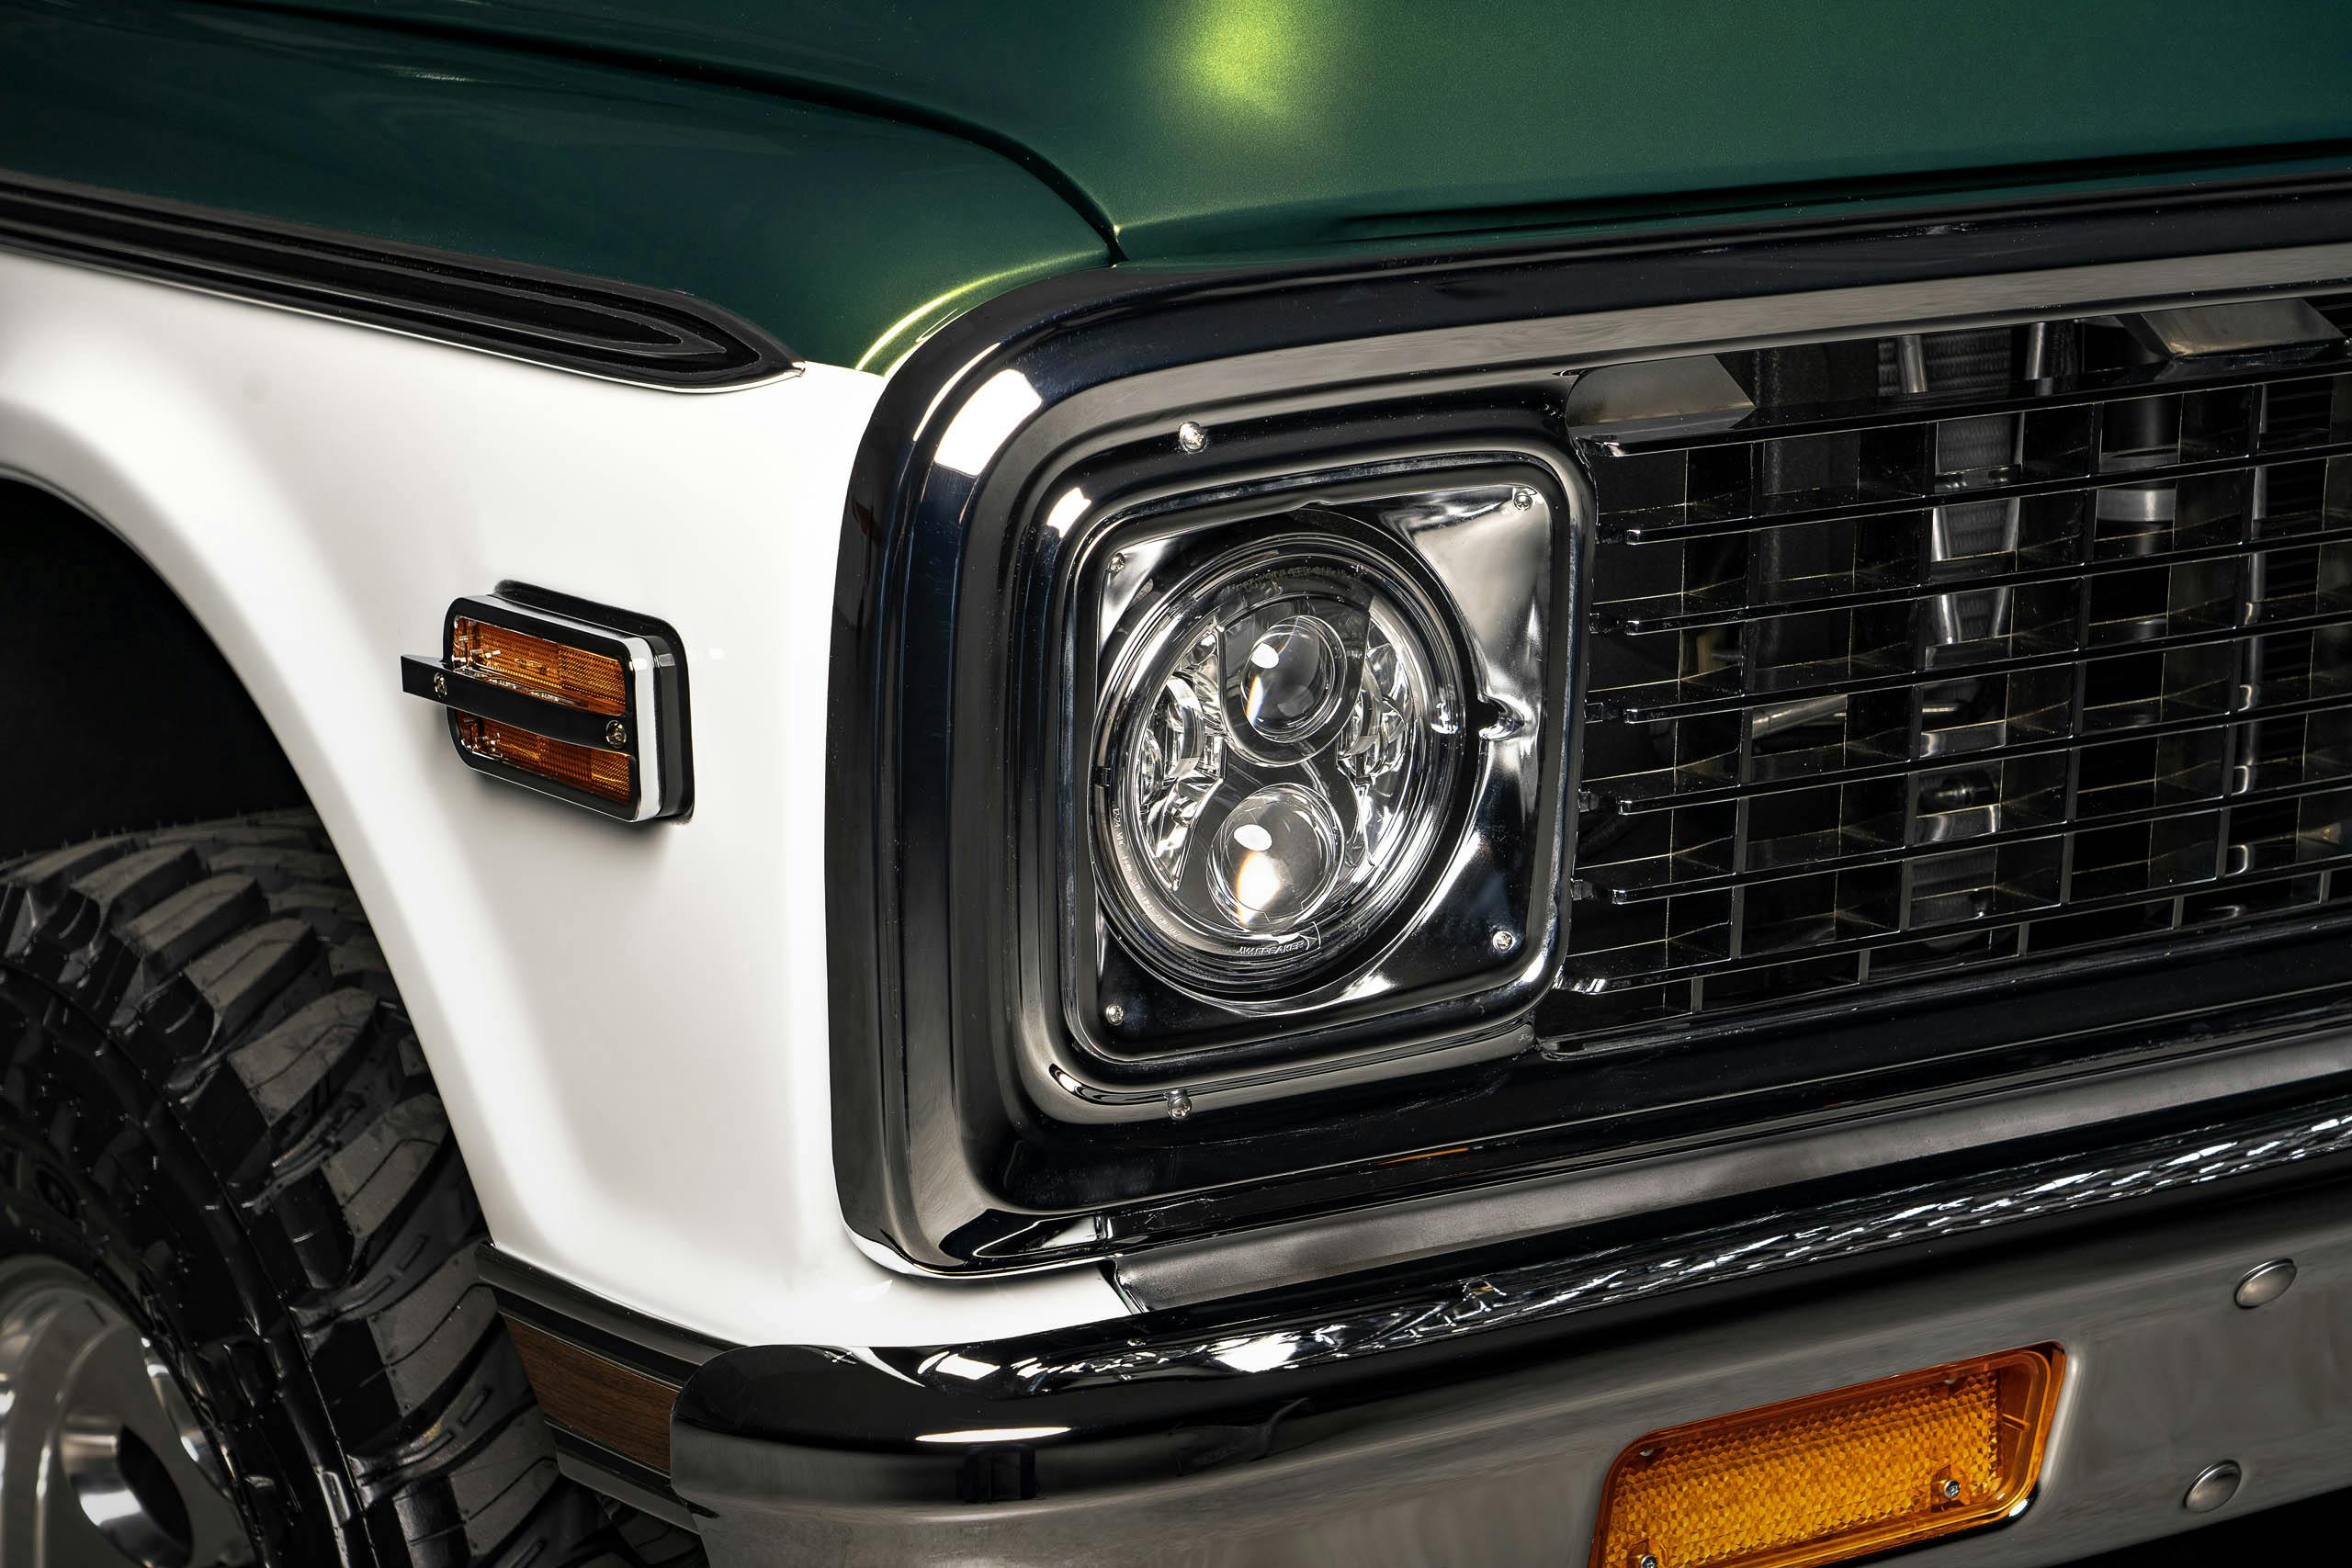 Velocity Modern Classics K5 Chevy Blazer restomod exterior front lighting details